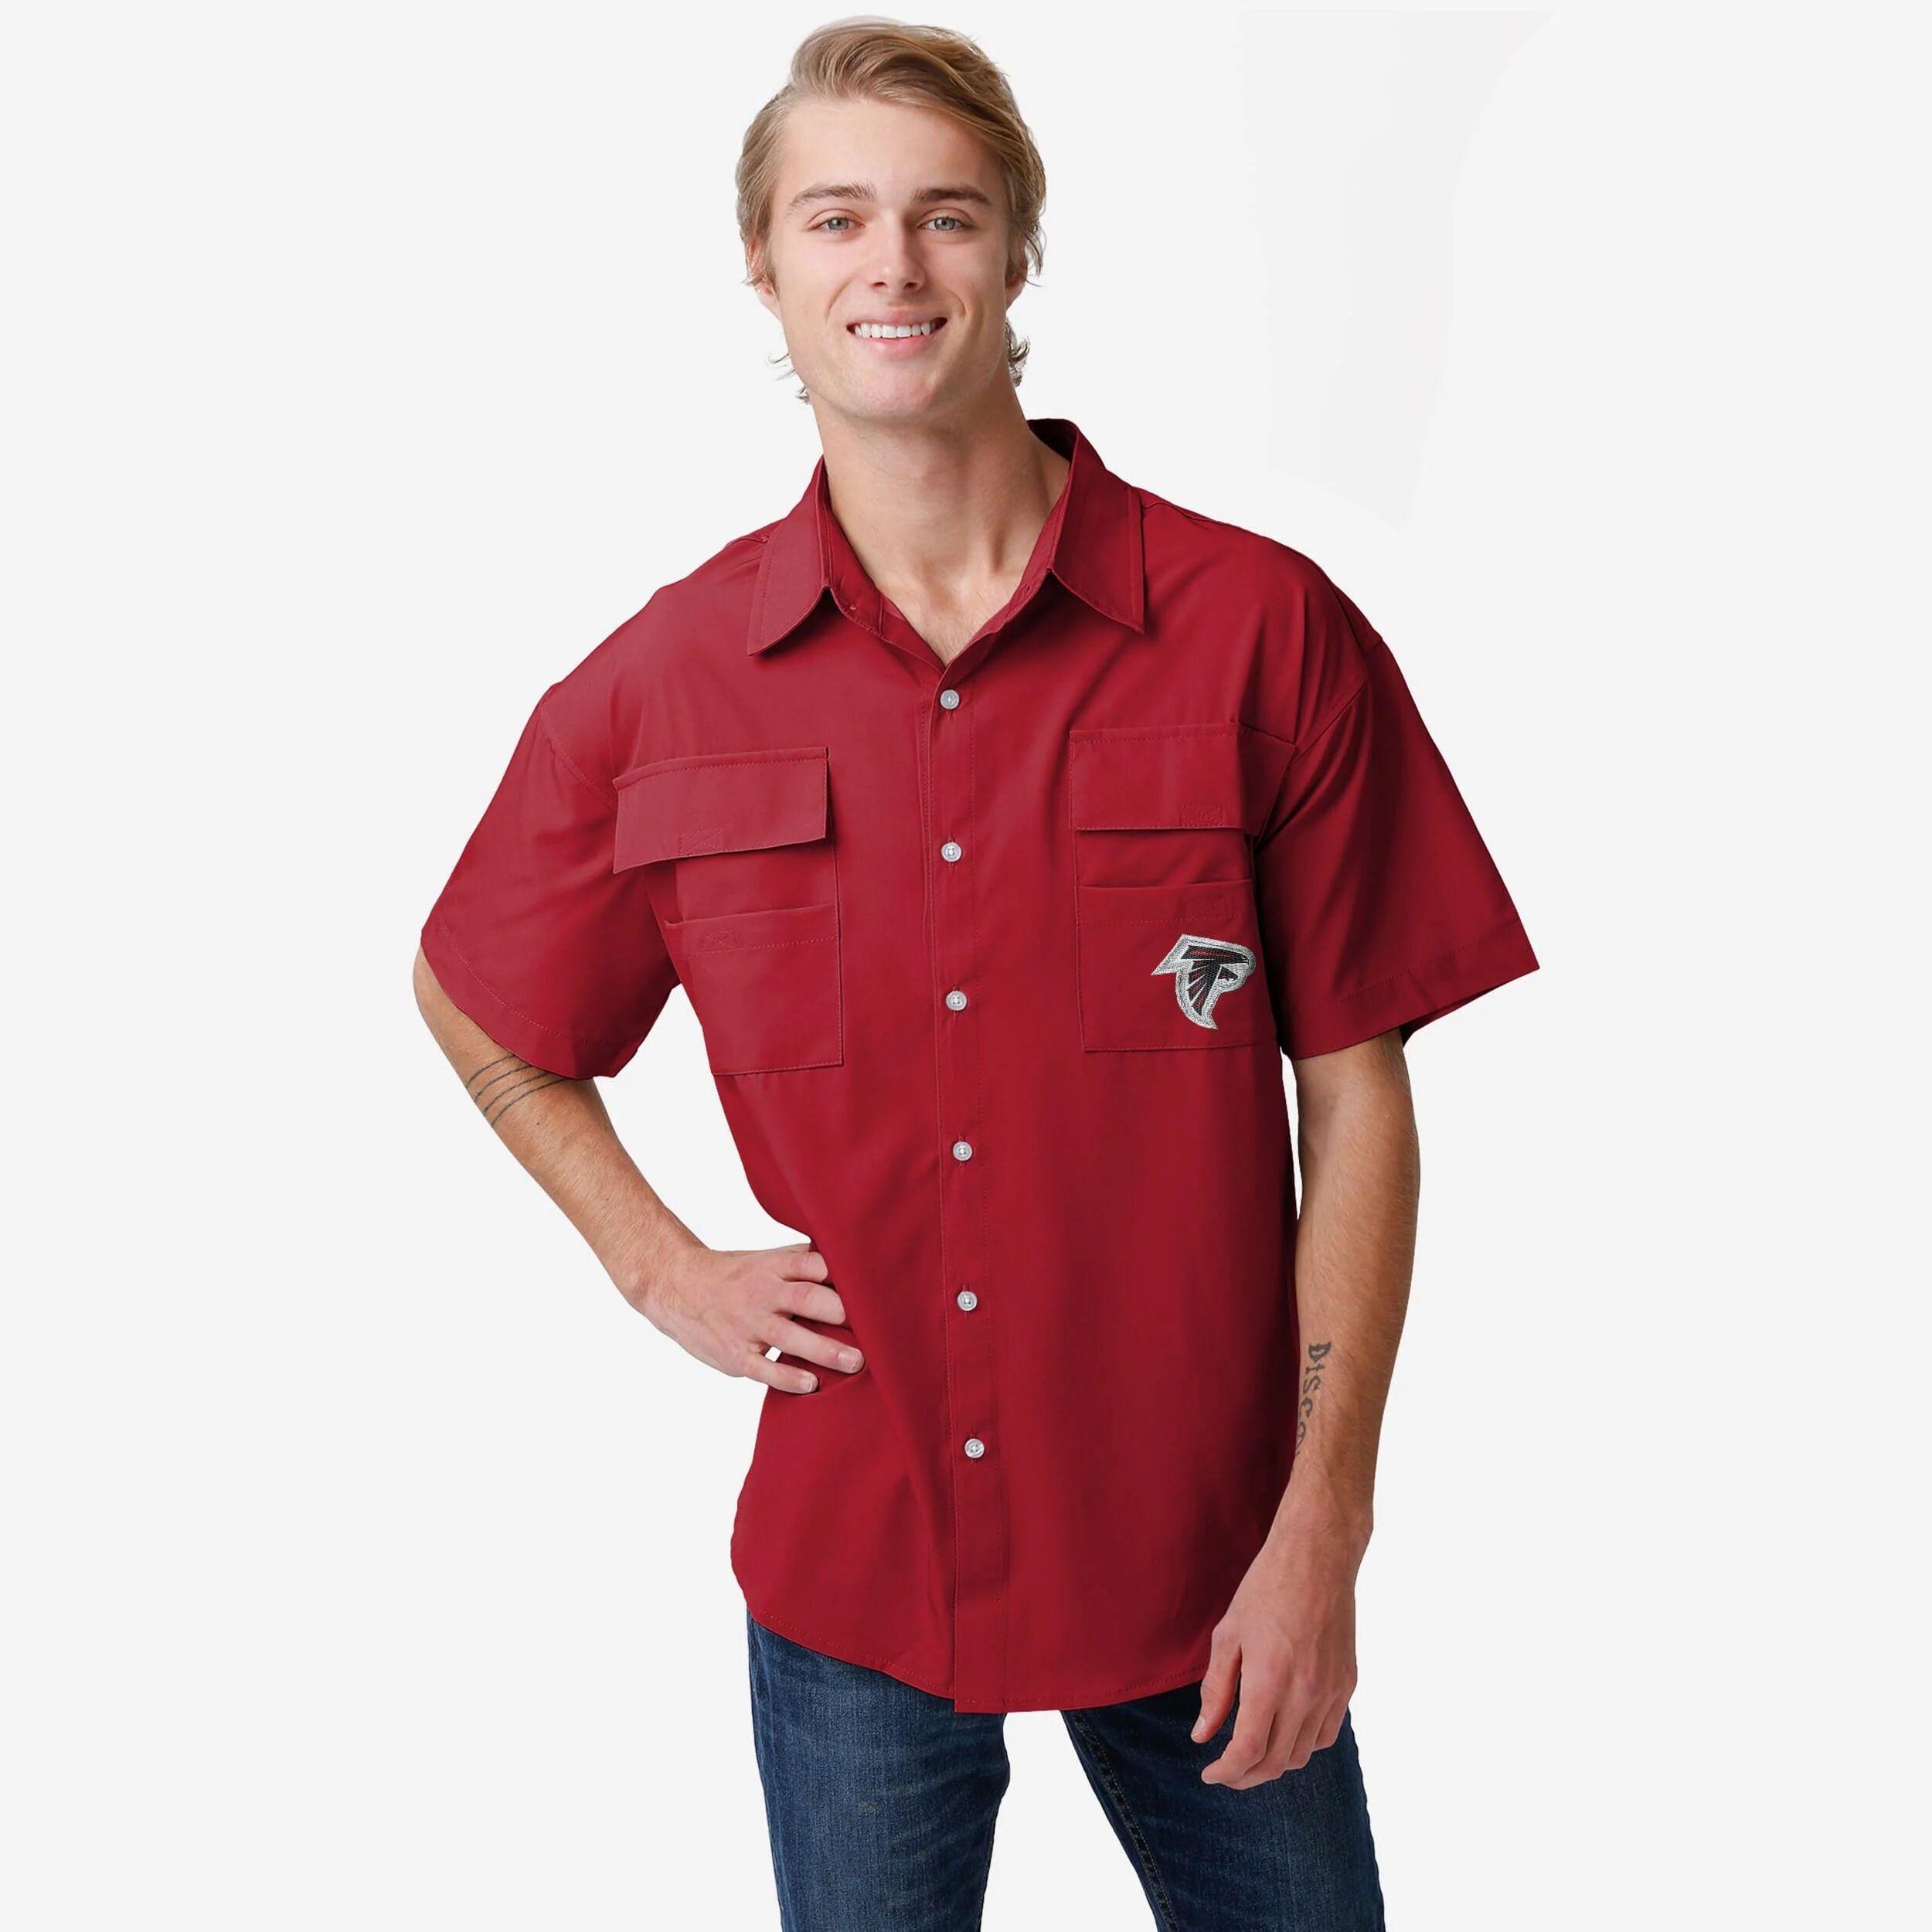 FOCO Atlanta Falcons Gone Fishing Shirt - XL - Men